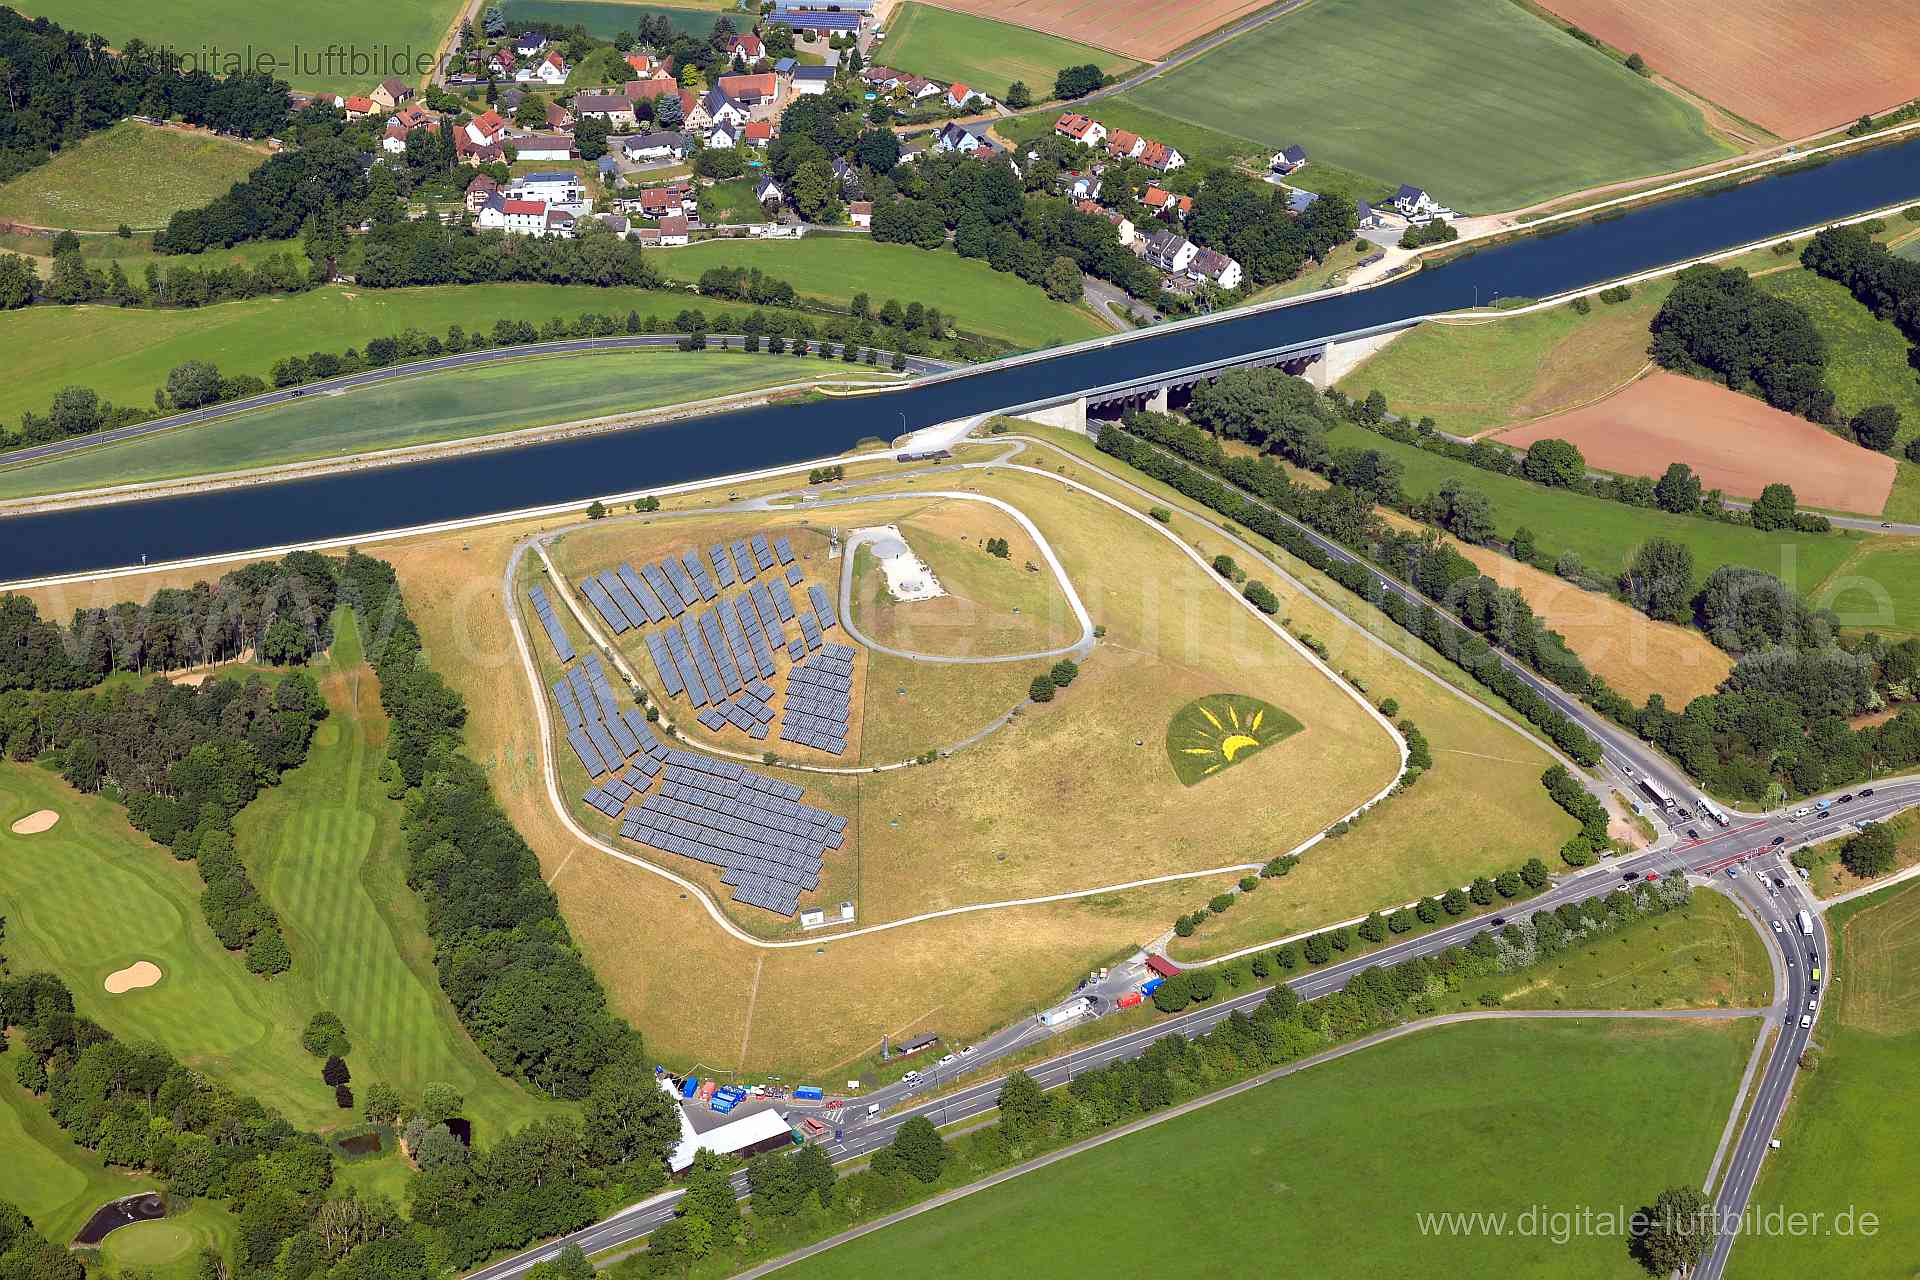 Luftbild - Solarberg, Ort: Fürth, Tags: Solarberg, Photovoltaik, Main-Donau-Kanal, Flexdorf, Vacher Straße...